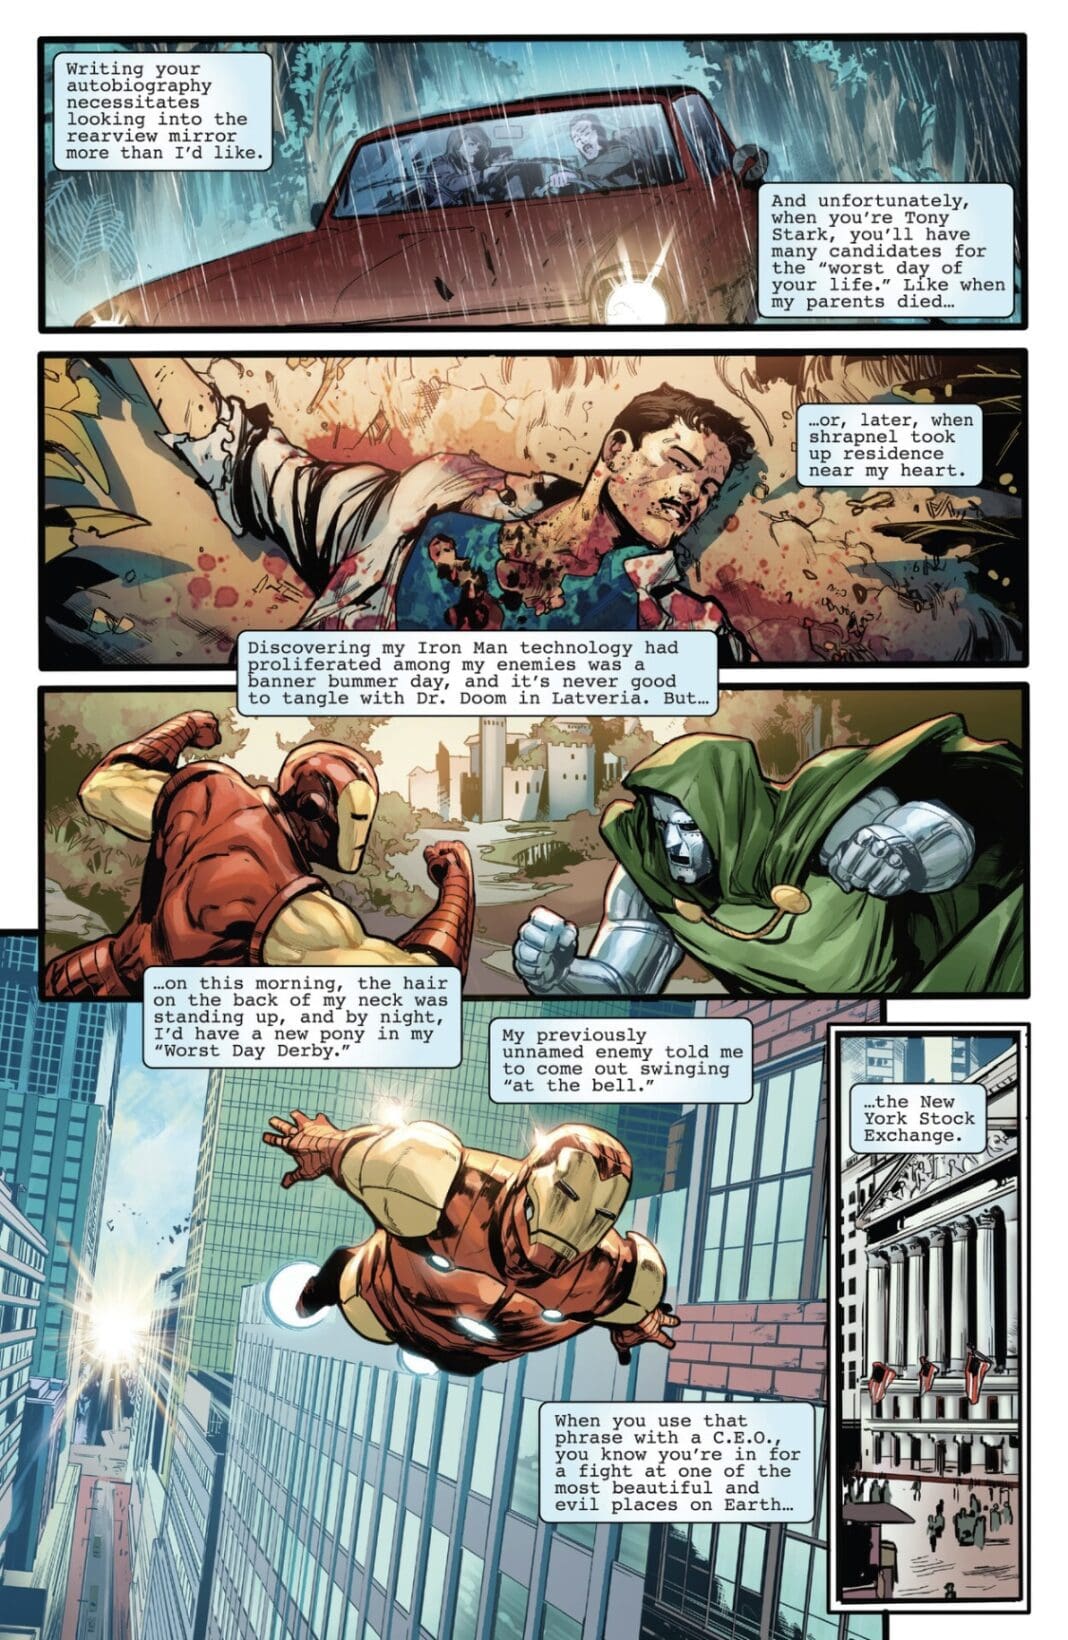 The Invincible Iron Man 4 Review! NERD INITIATIVE